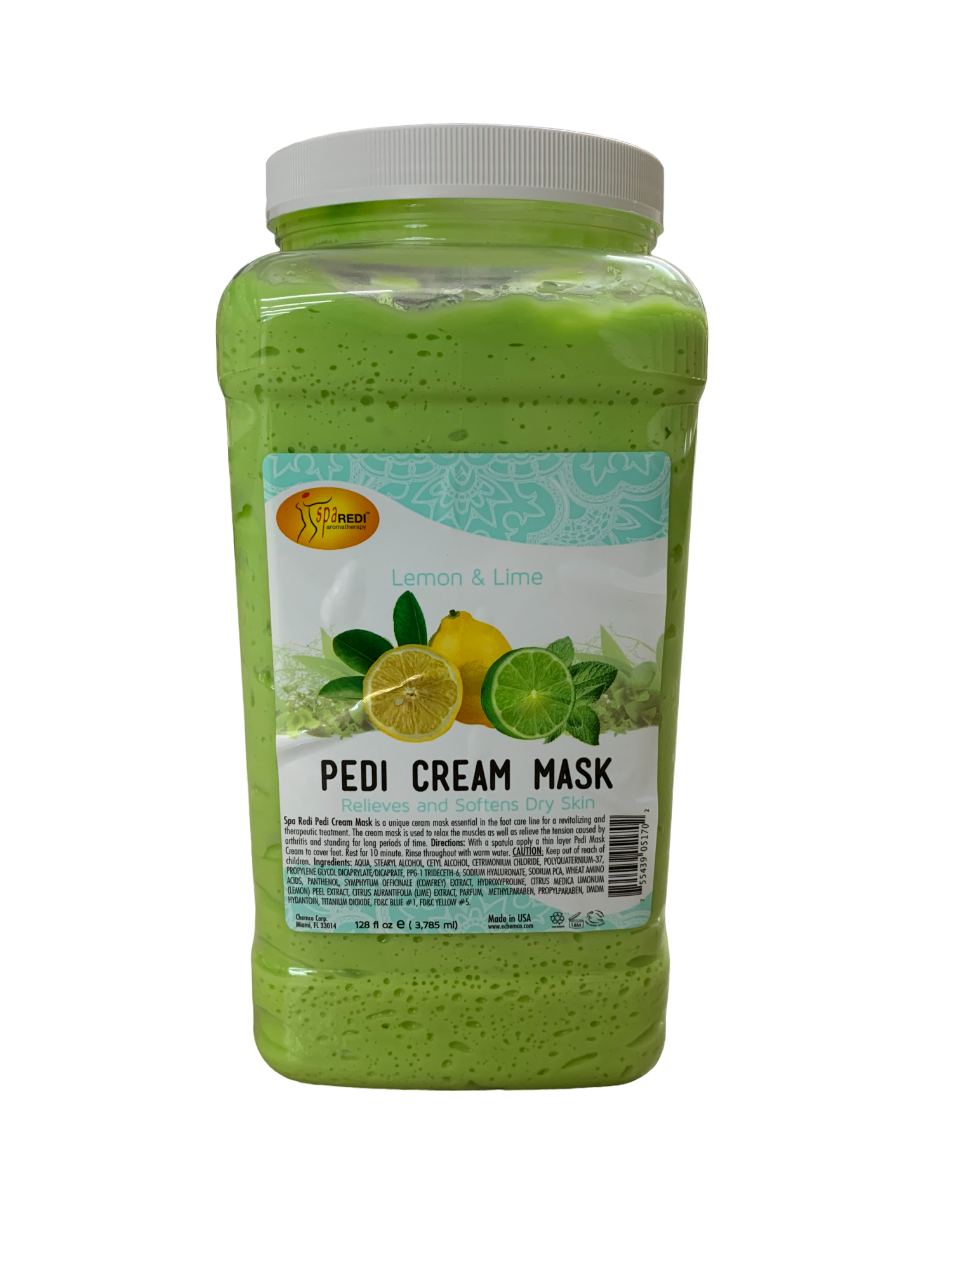 SpaRedi Pedi Cream Mask Lemon and Lime